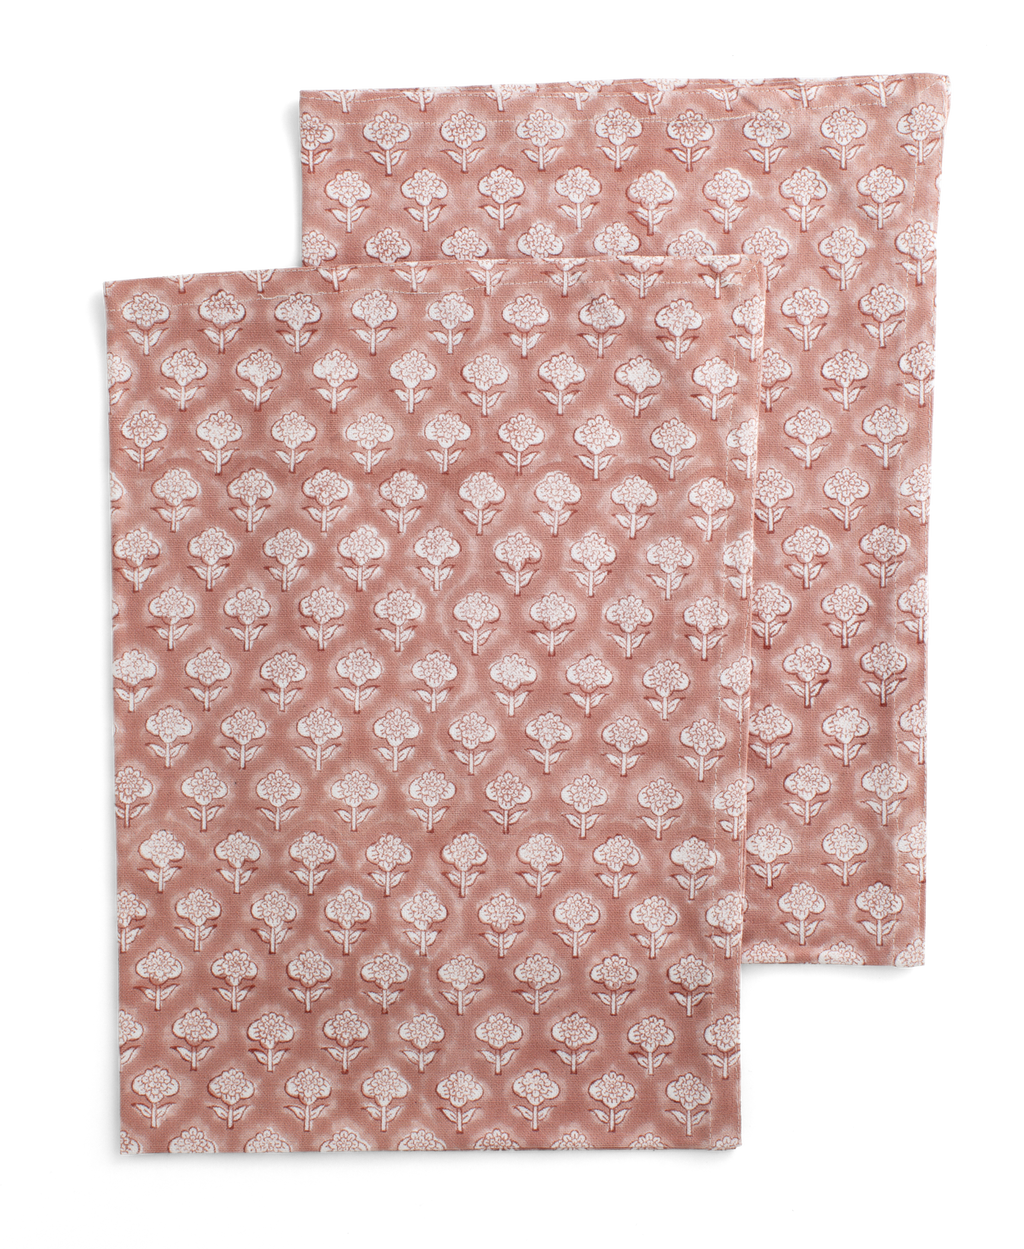 Kitchen towels with Fiori print in Fuchsia Rose